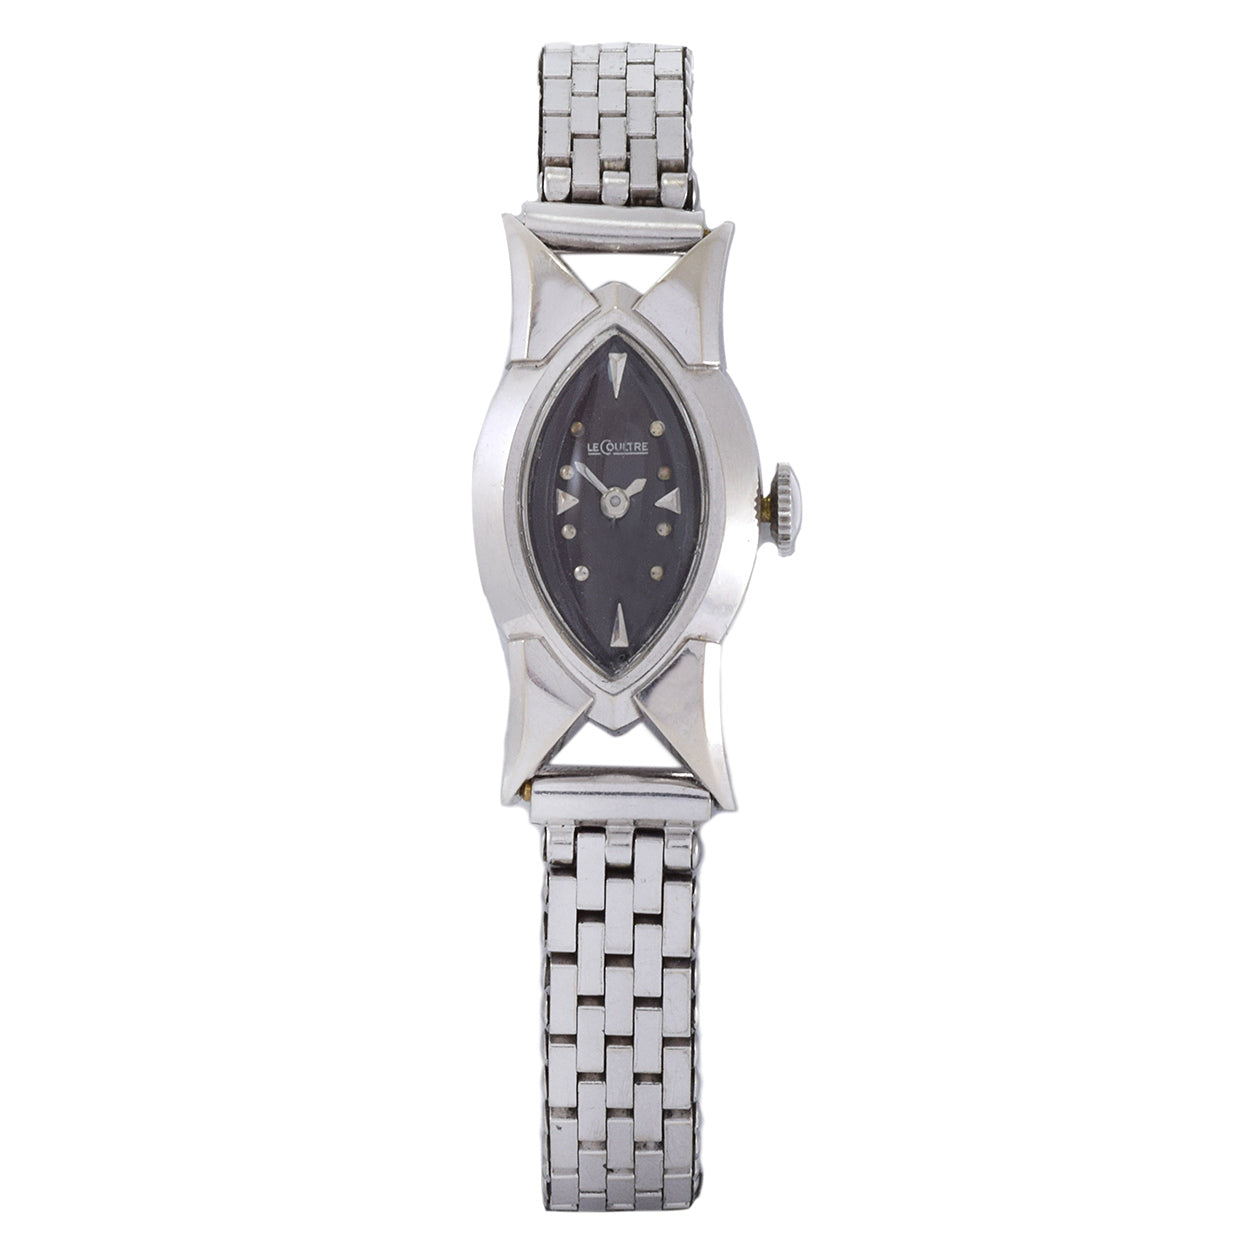 Vintage 1960's Ladies LeCoultre watch